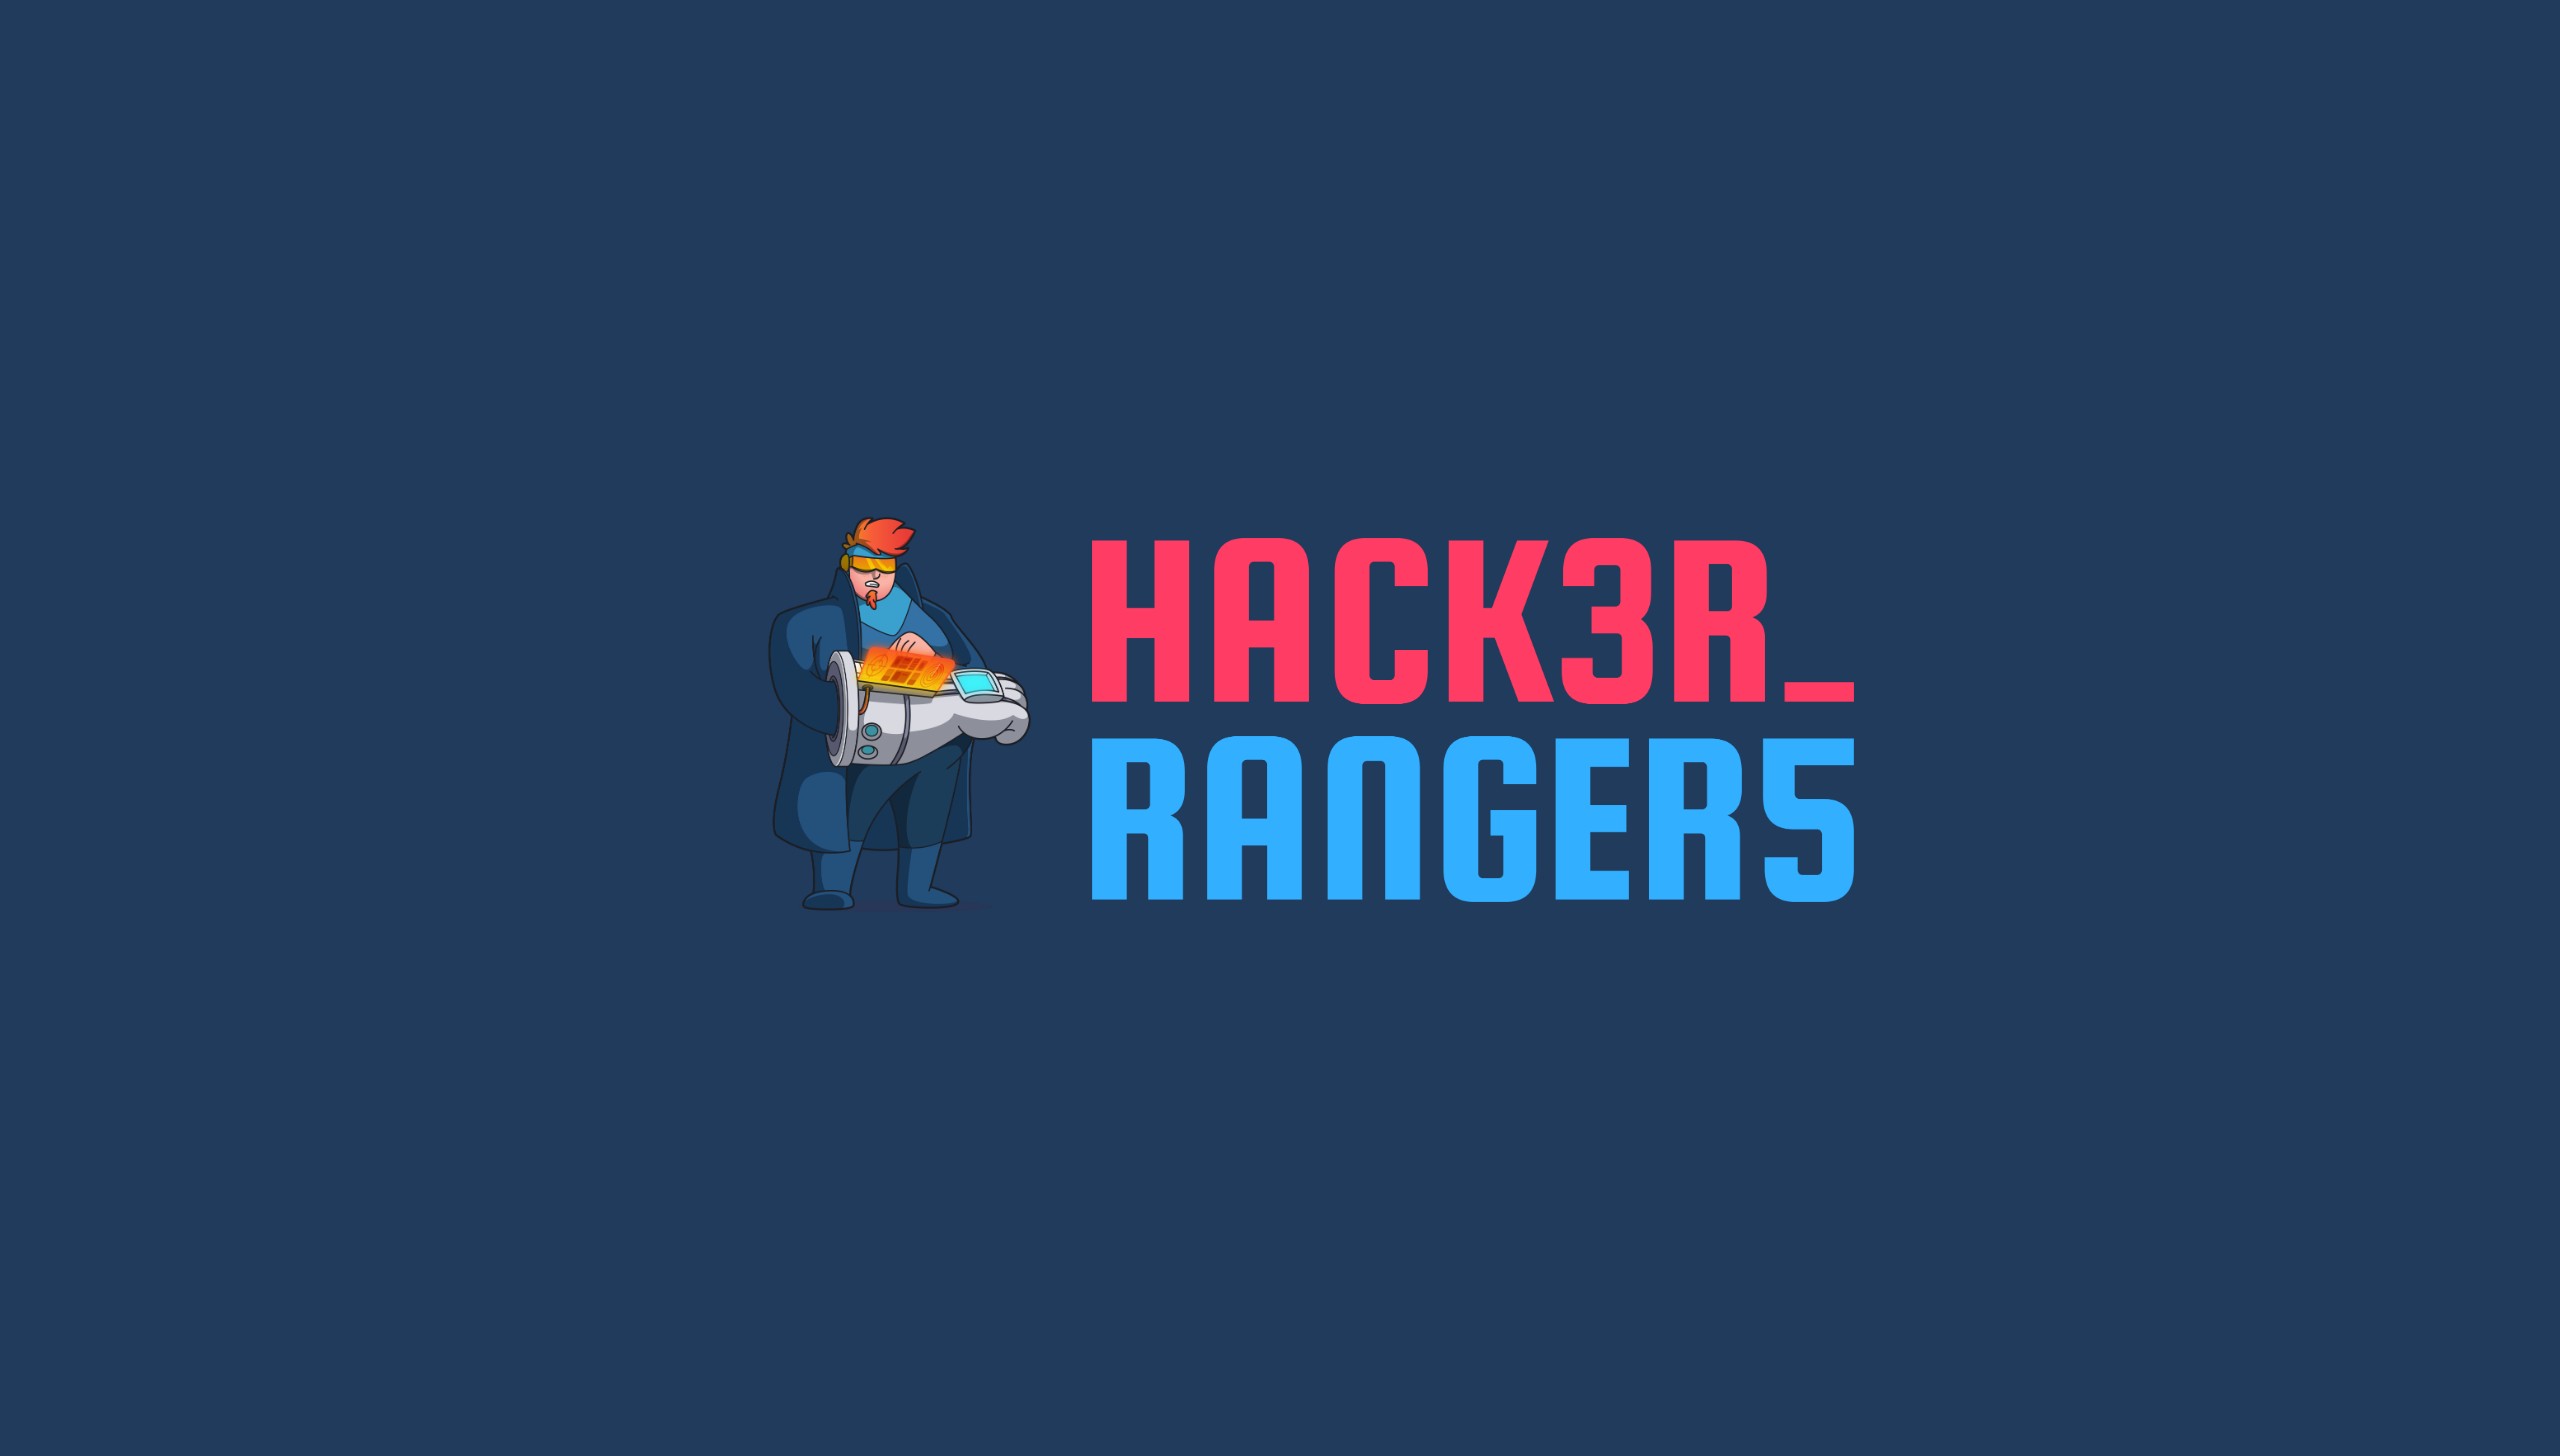 Hacker Rangers